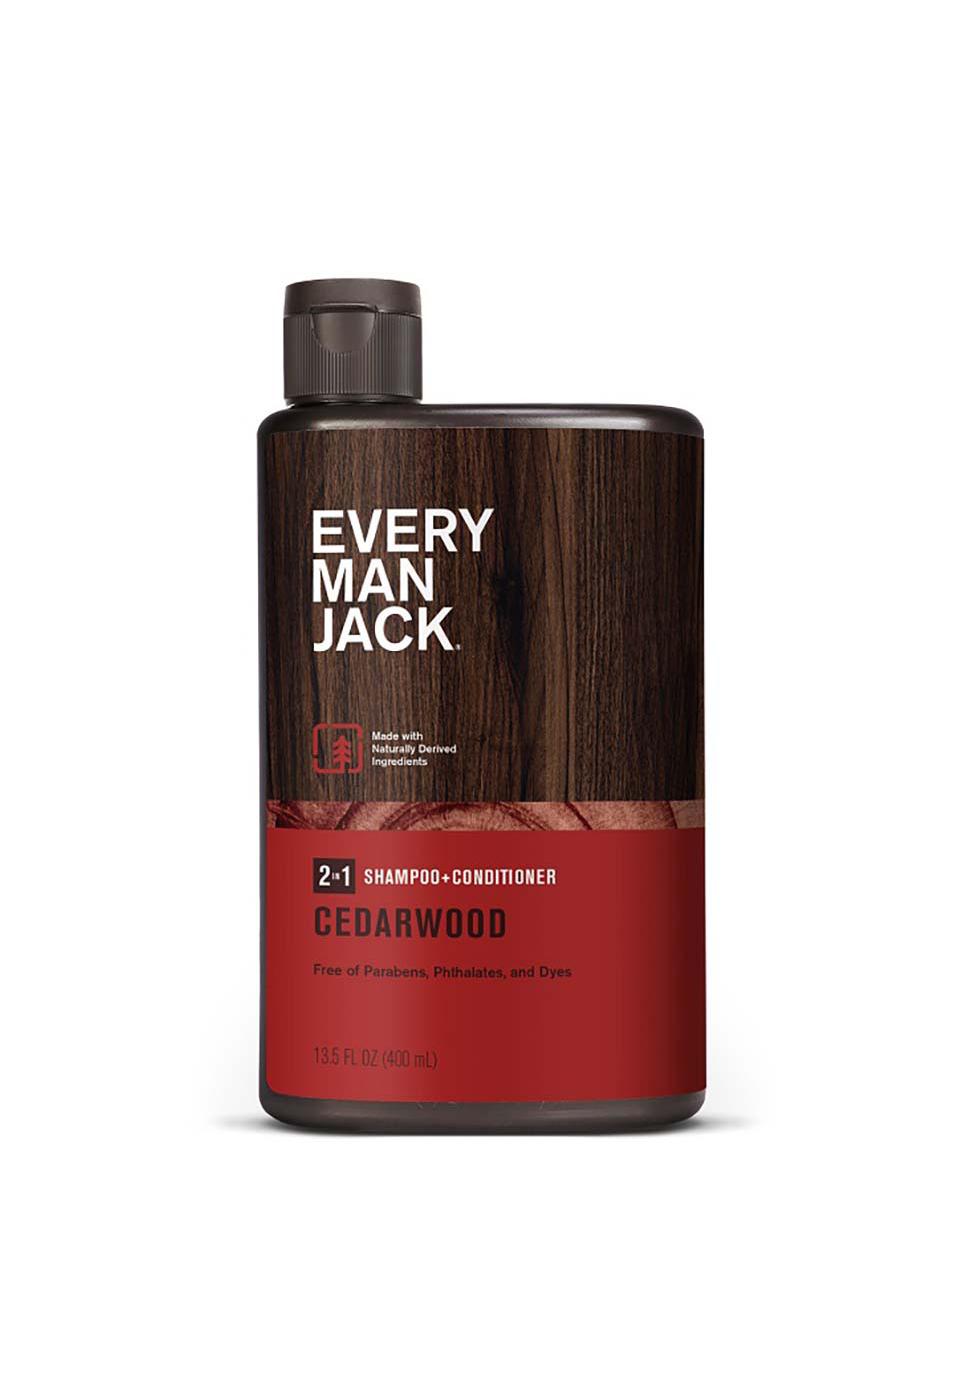 Every Man Jack 2 In 1 Shampoo + Conditioner - Cedarwood; image 1 of 2